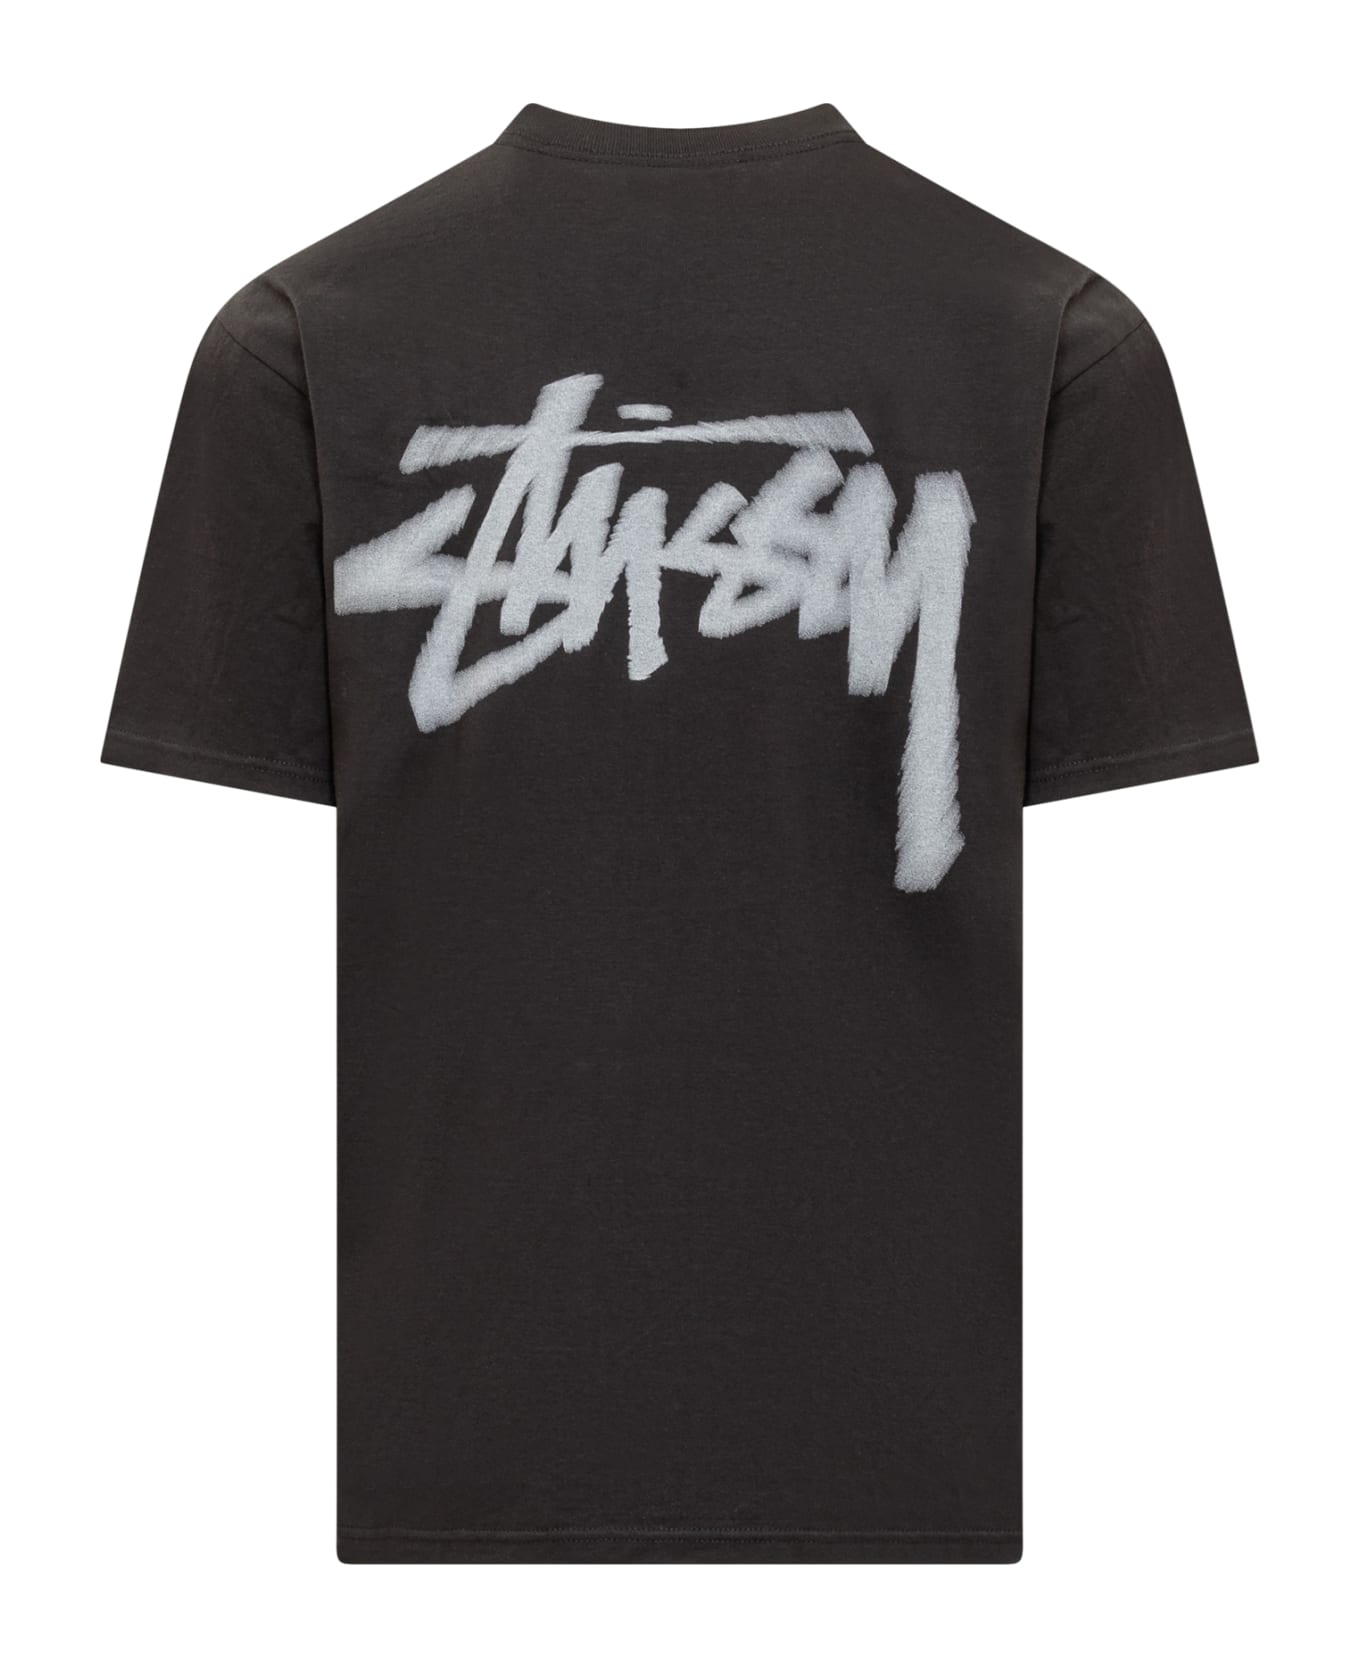 Stussy Dizzy T-shirt - Black シャツ